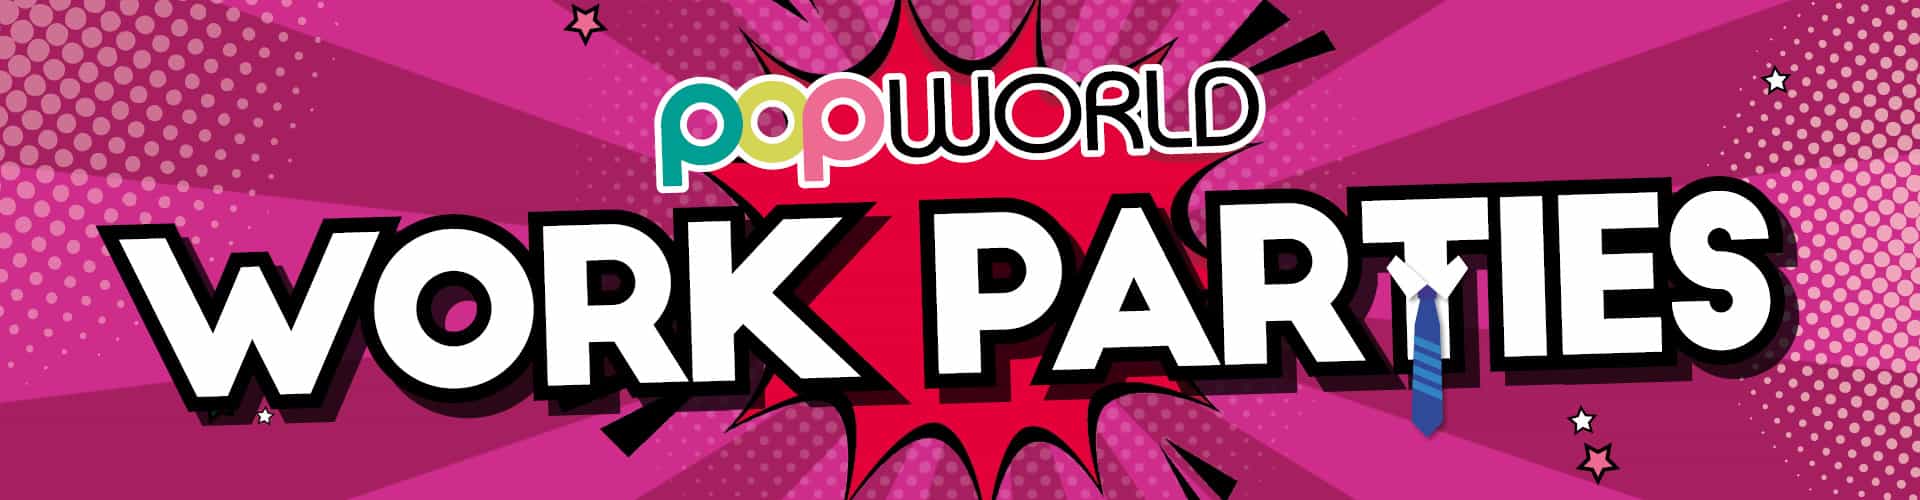 Work Parties at Popworld